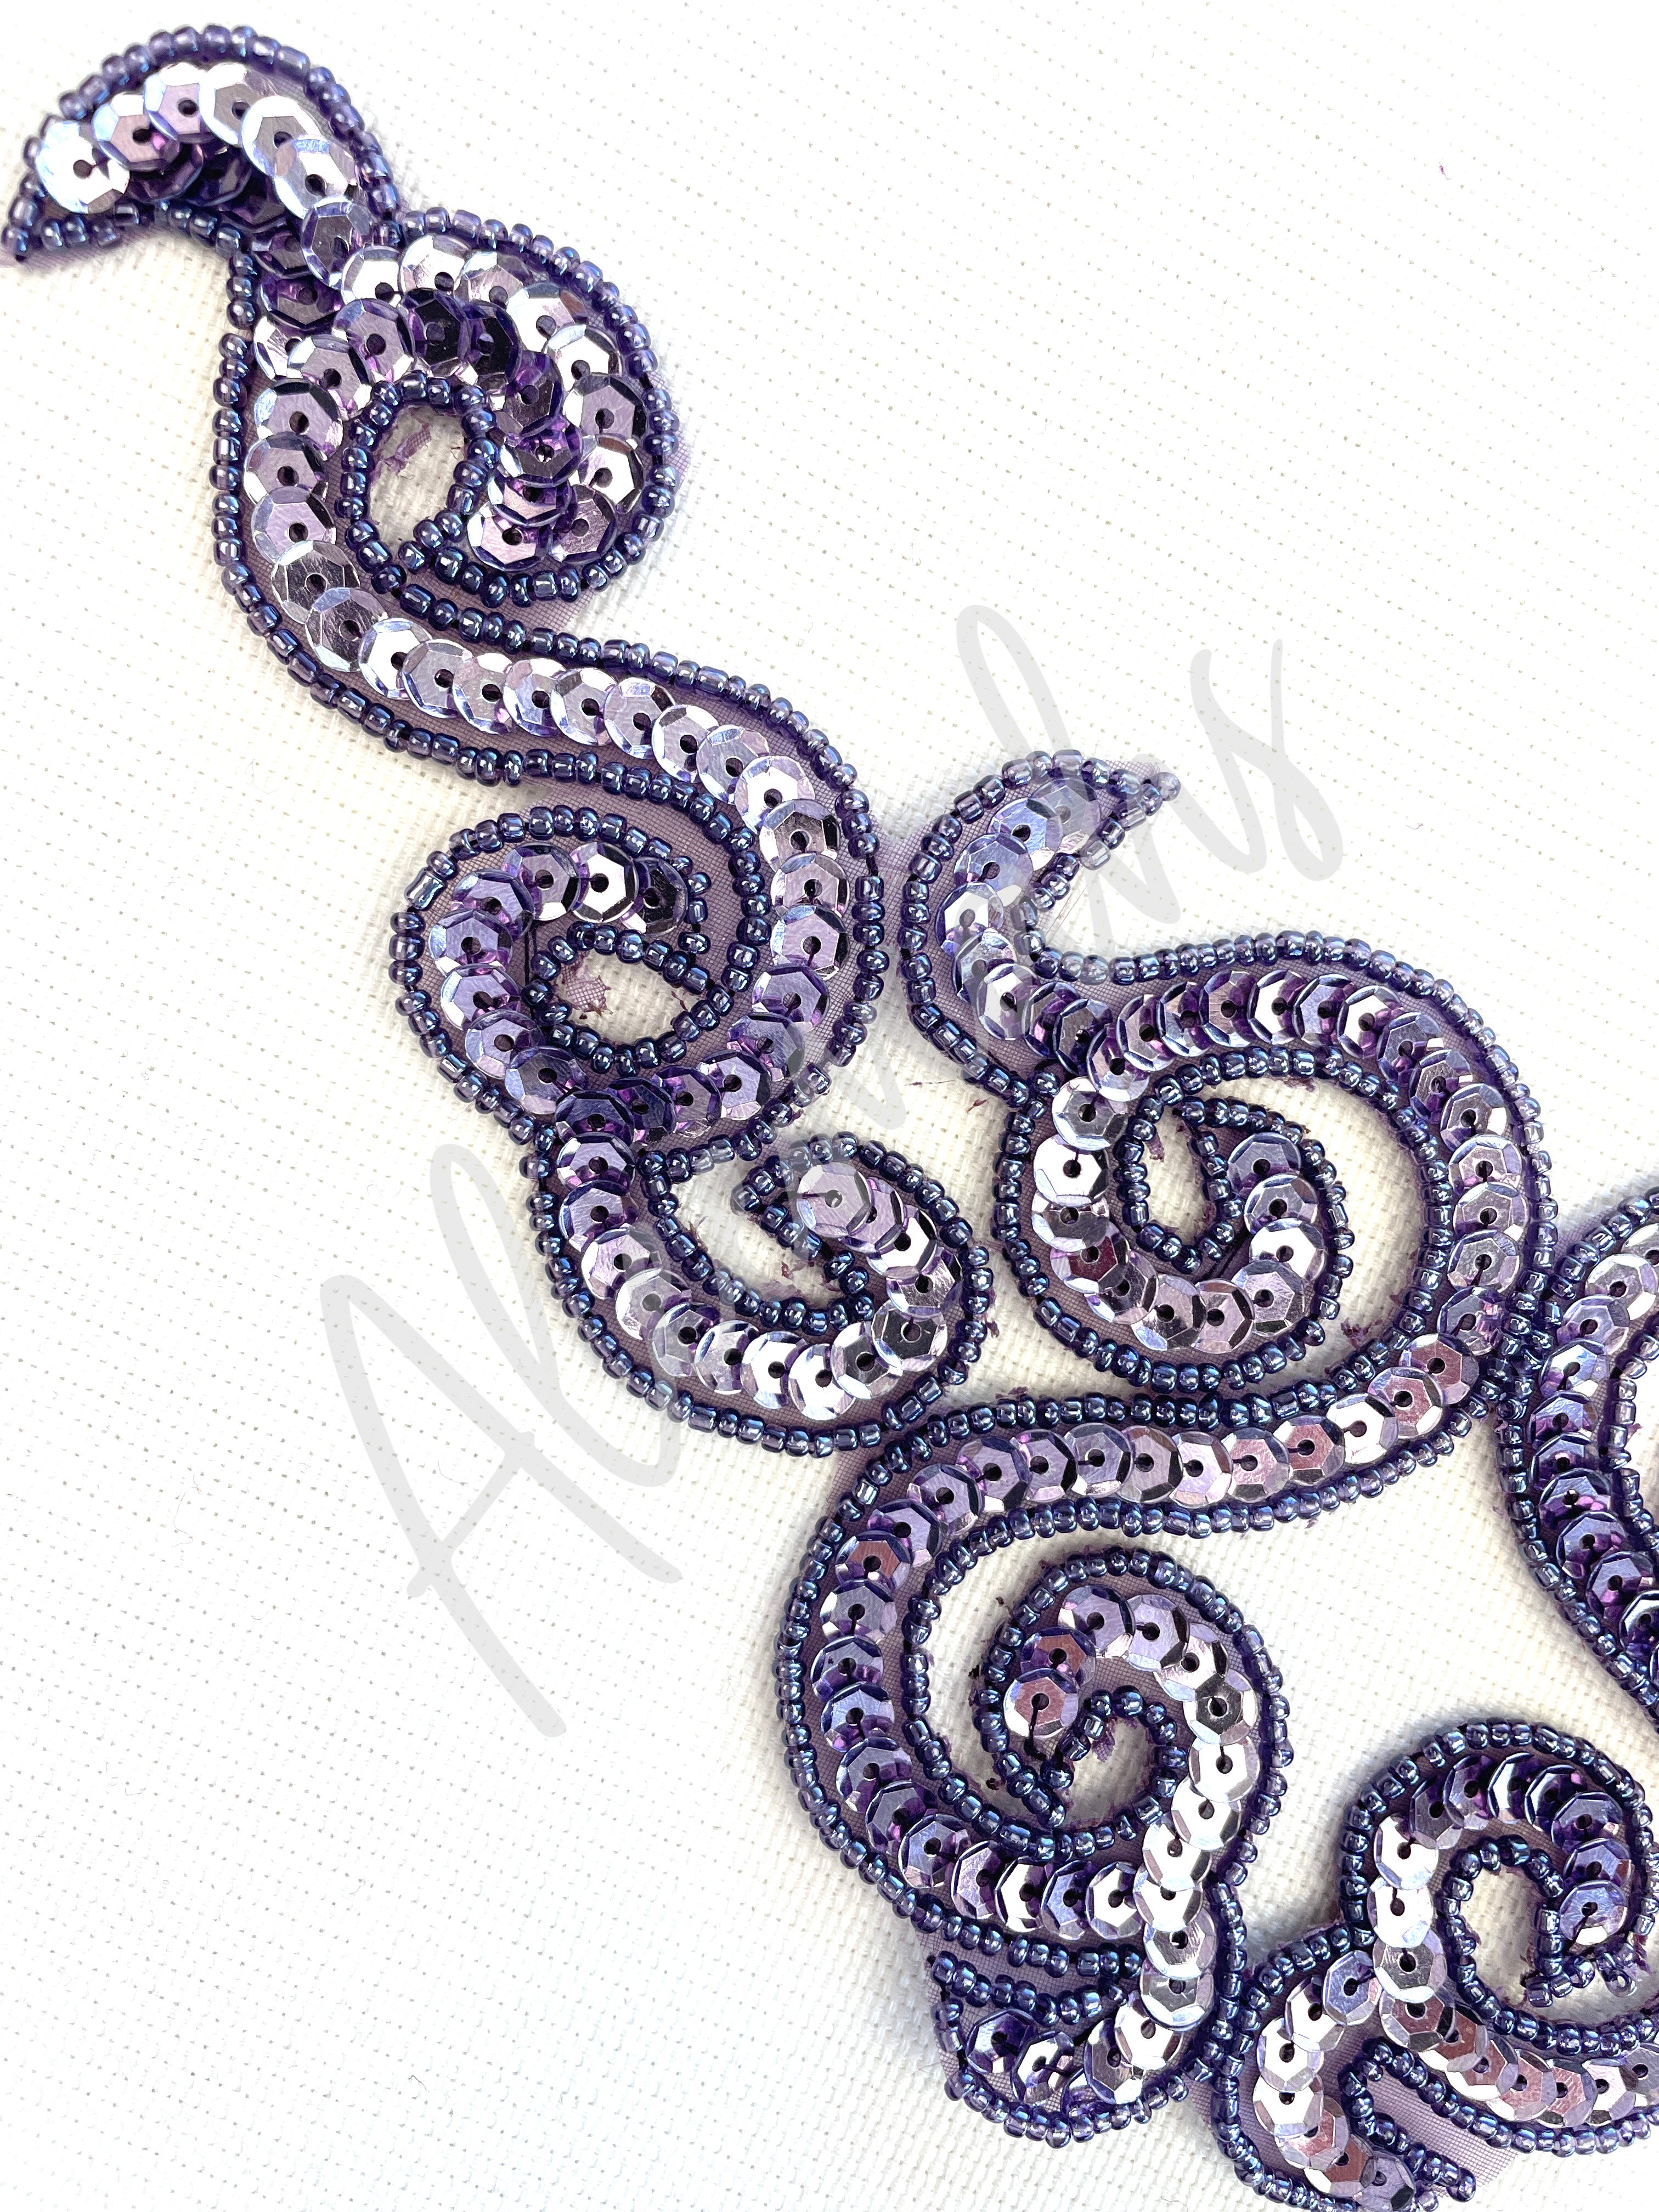 A-107: Metallic Lilac sequin and bead applique